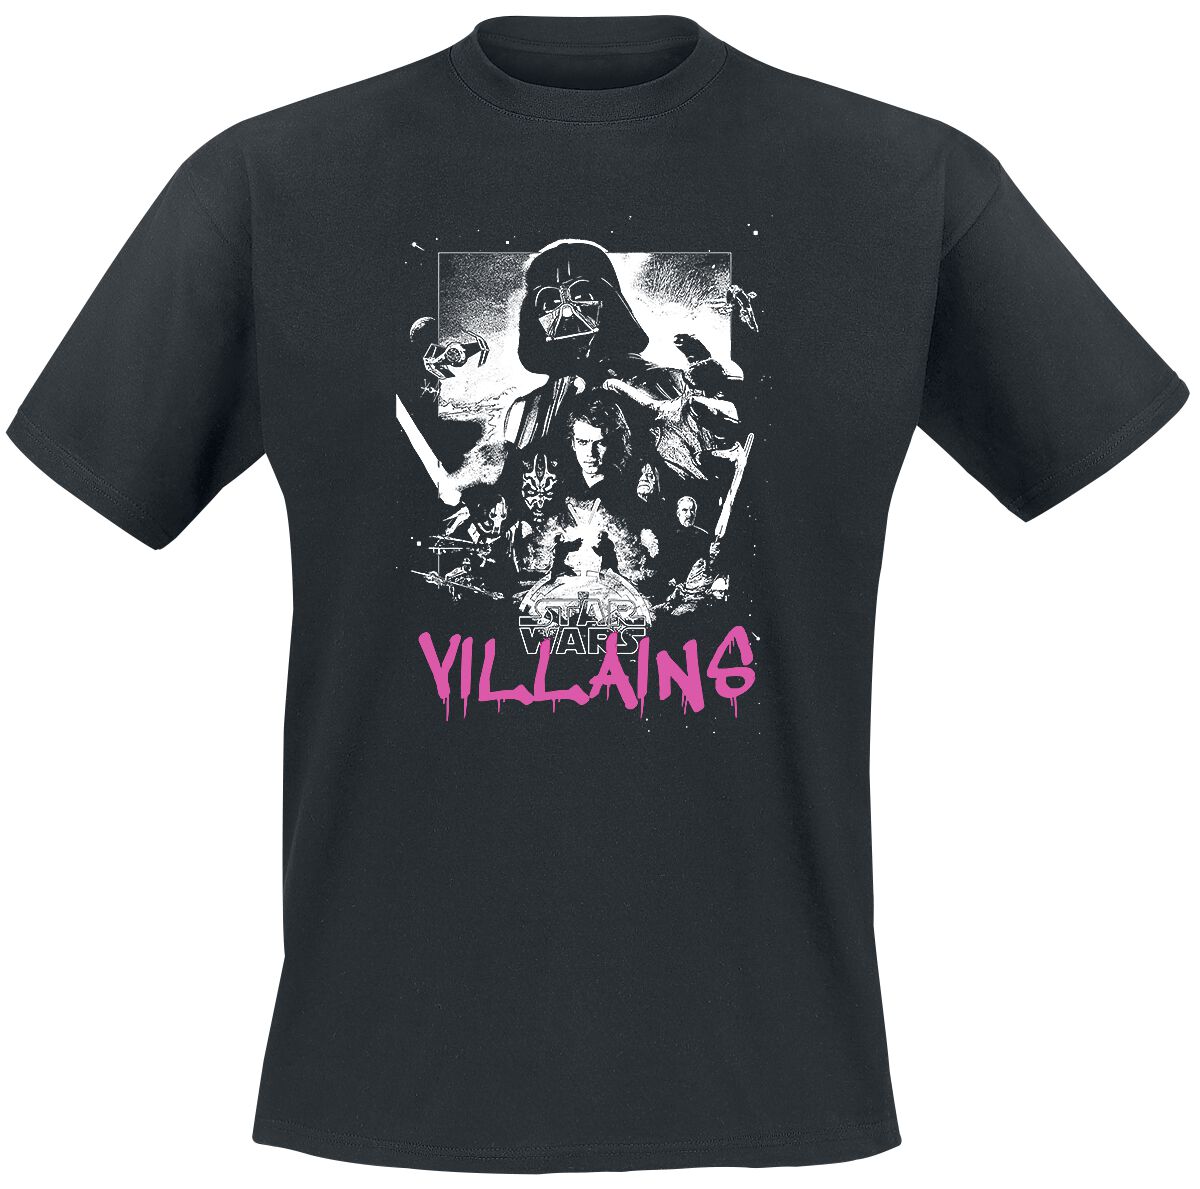 Star Wars Villains - Tag T-Shirt black